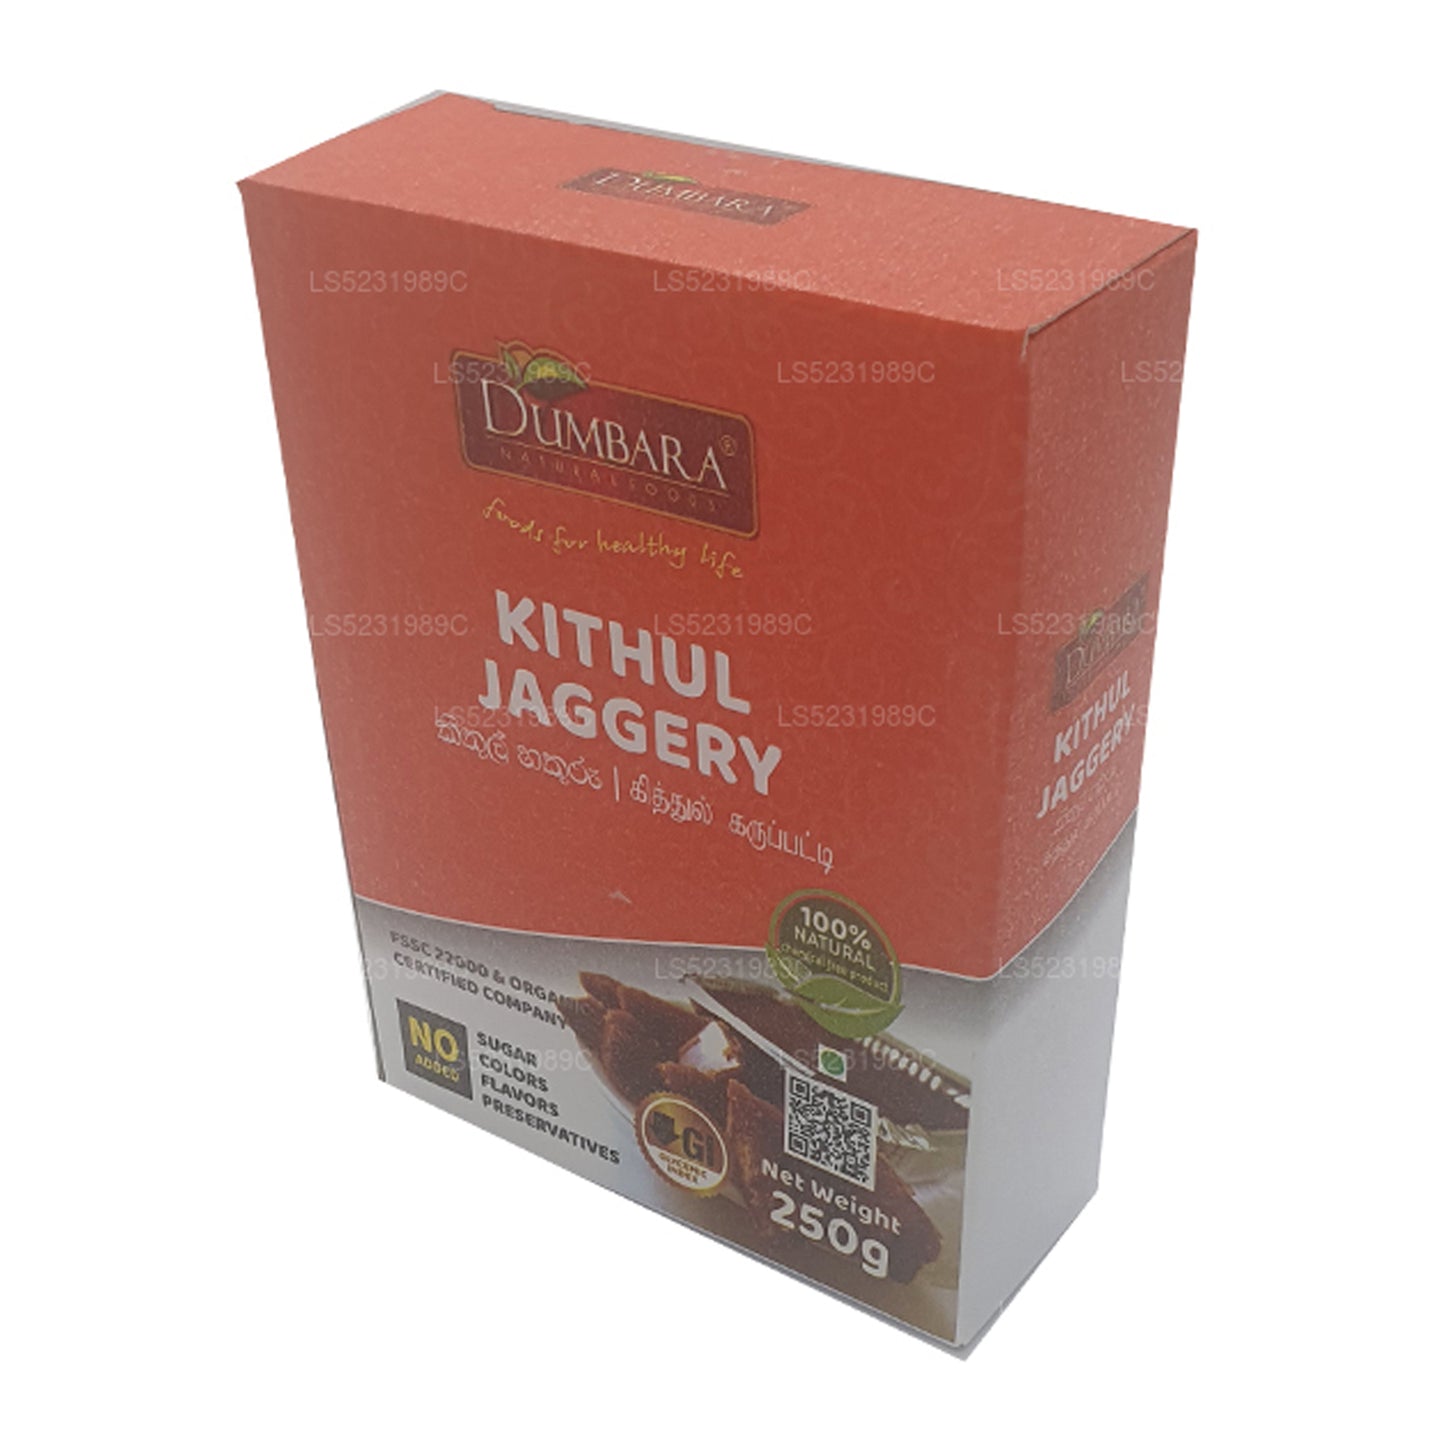 Dumbara Kithul Jaggery (250 g)